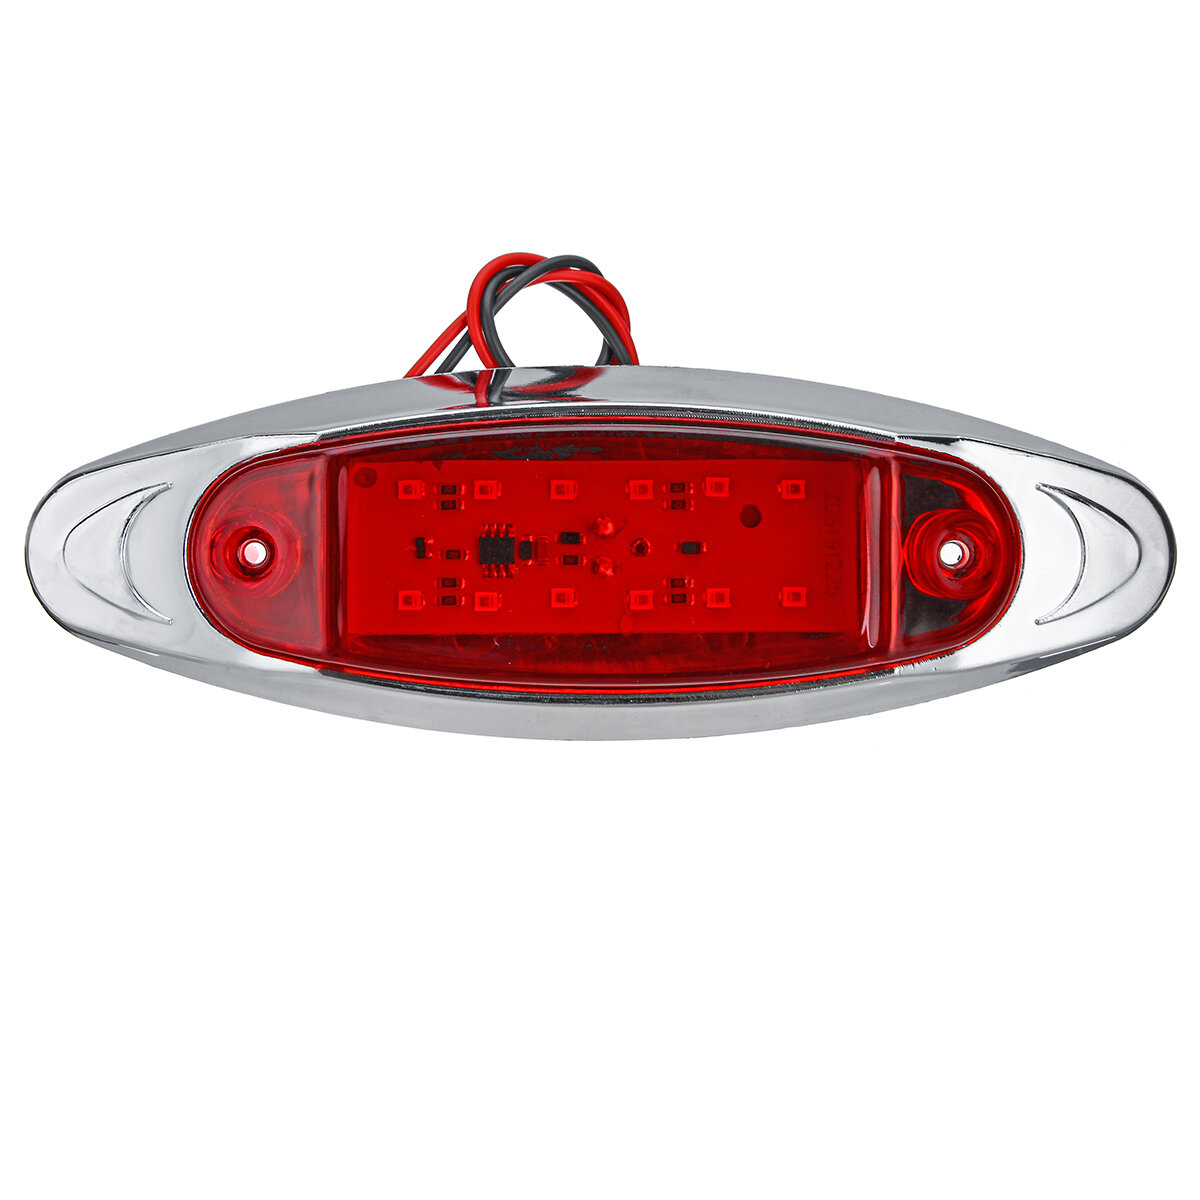 

2Pcs Red 24V LED Side Marker Light Flash Strobe Emergency Warning Lamp For Boat Car Truck Trailer